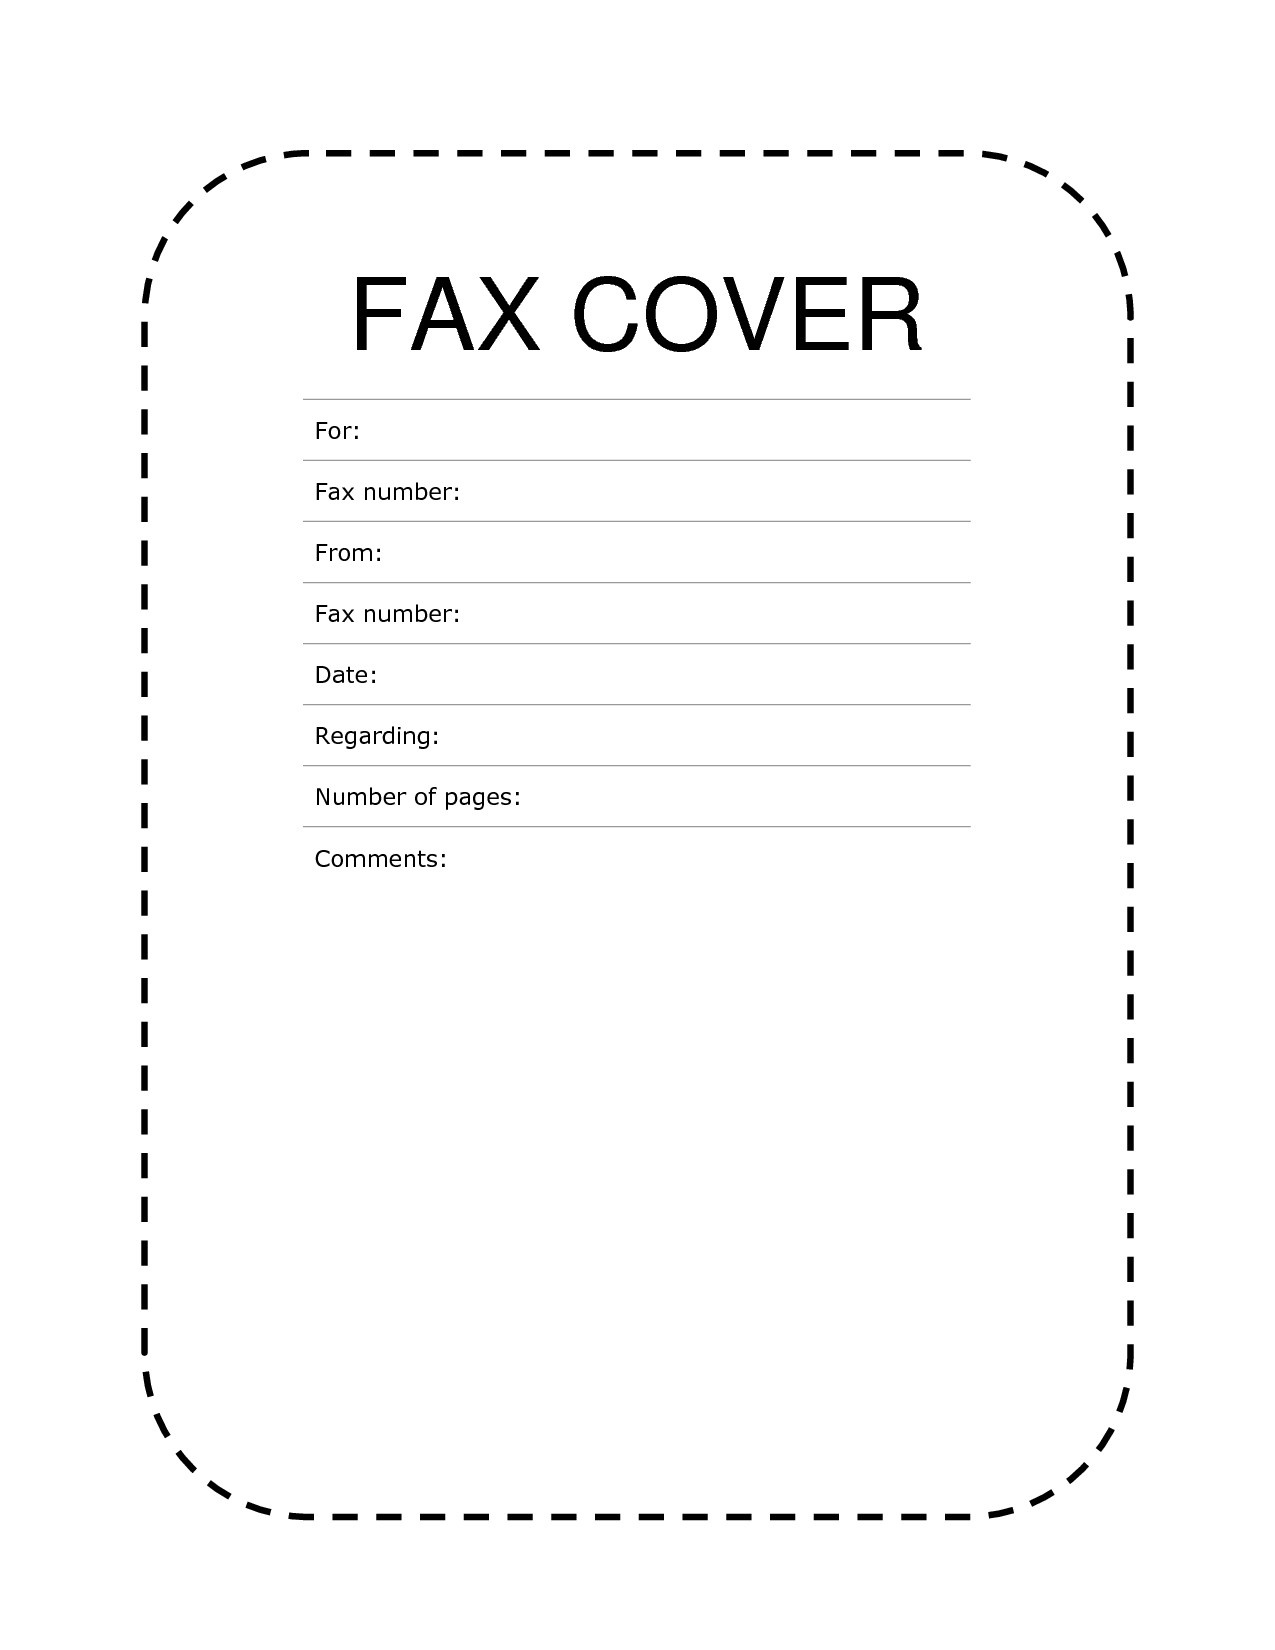 Free Fax Cover Sheets Template Unique Free Fax Cover Sheet Template - Free Printable Fax Cover Sheet Pdf